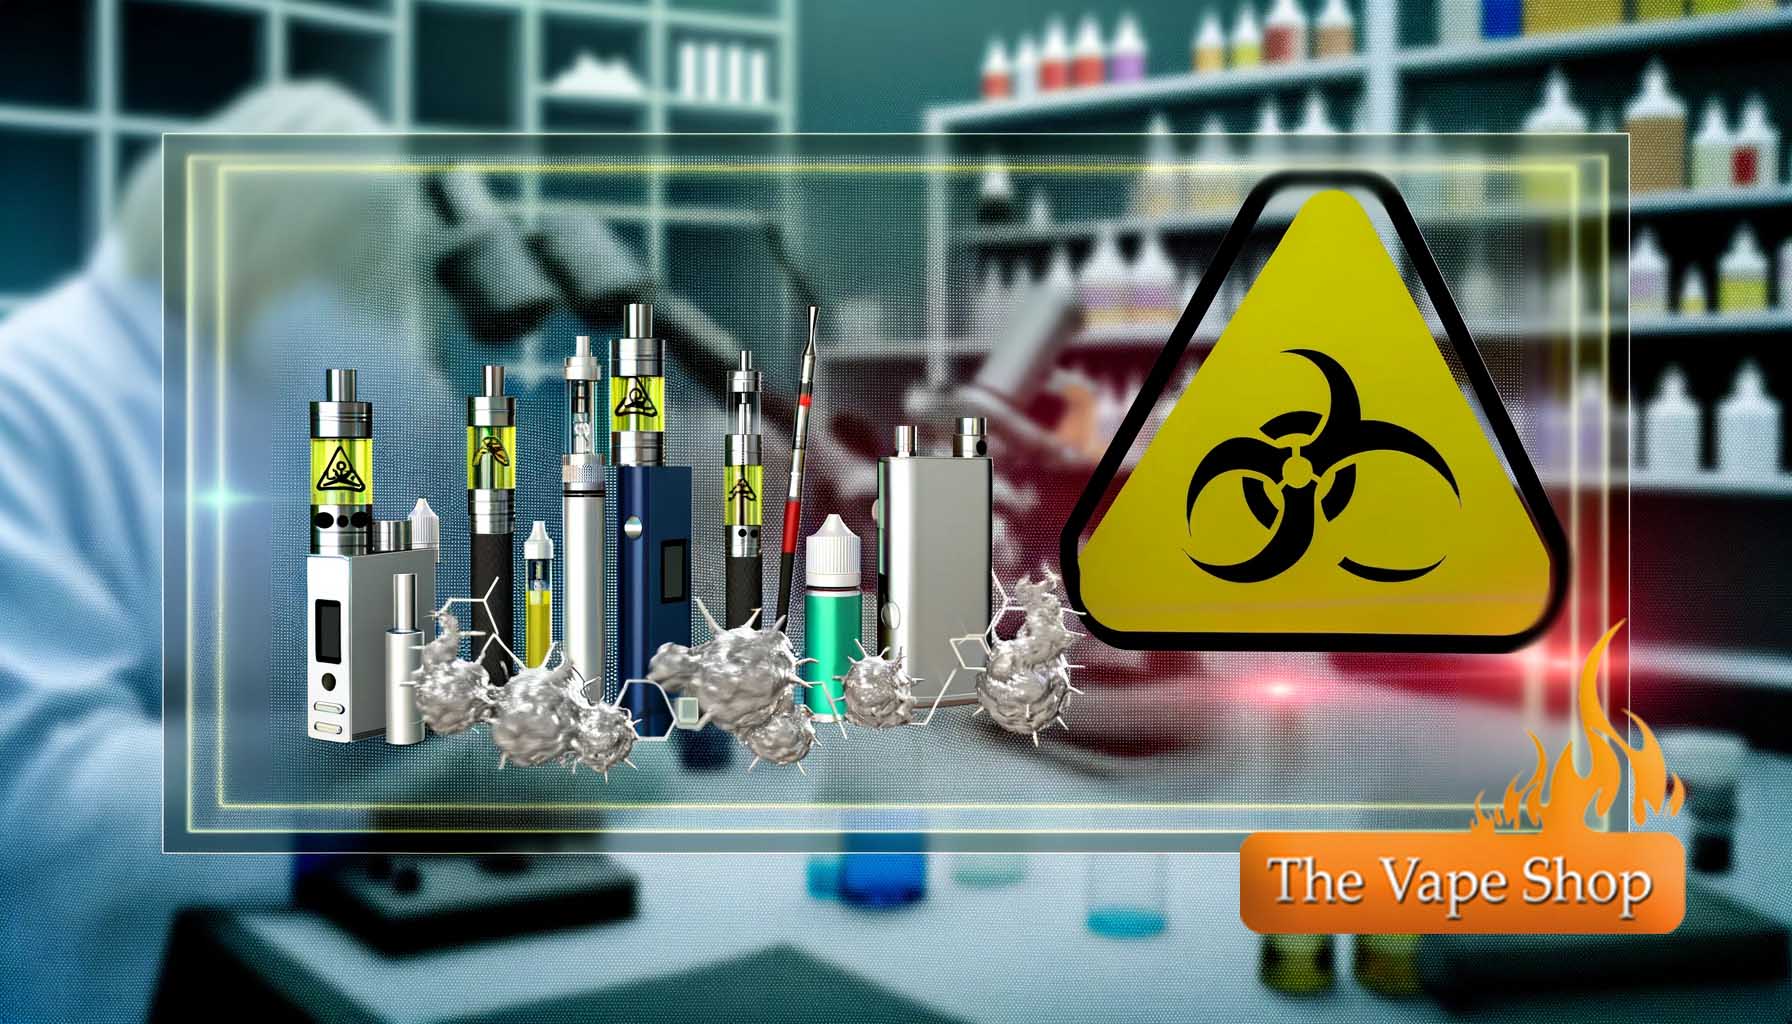 Urgent Alert: Hazardous Substances Detected in Unauthorised Vaping Products by The vape Shop